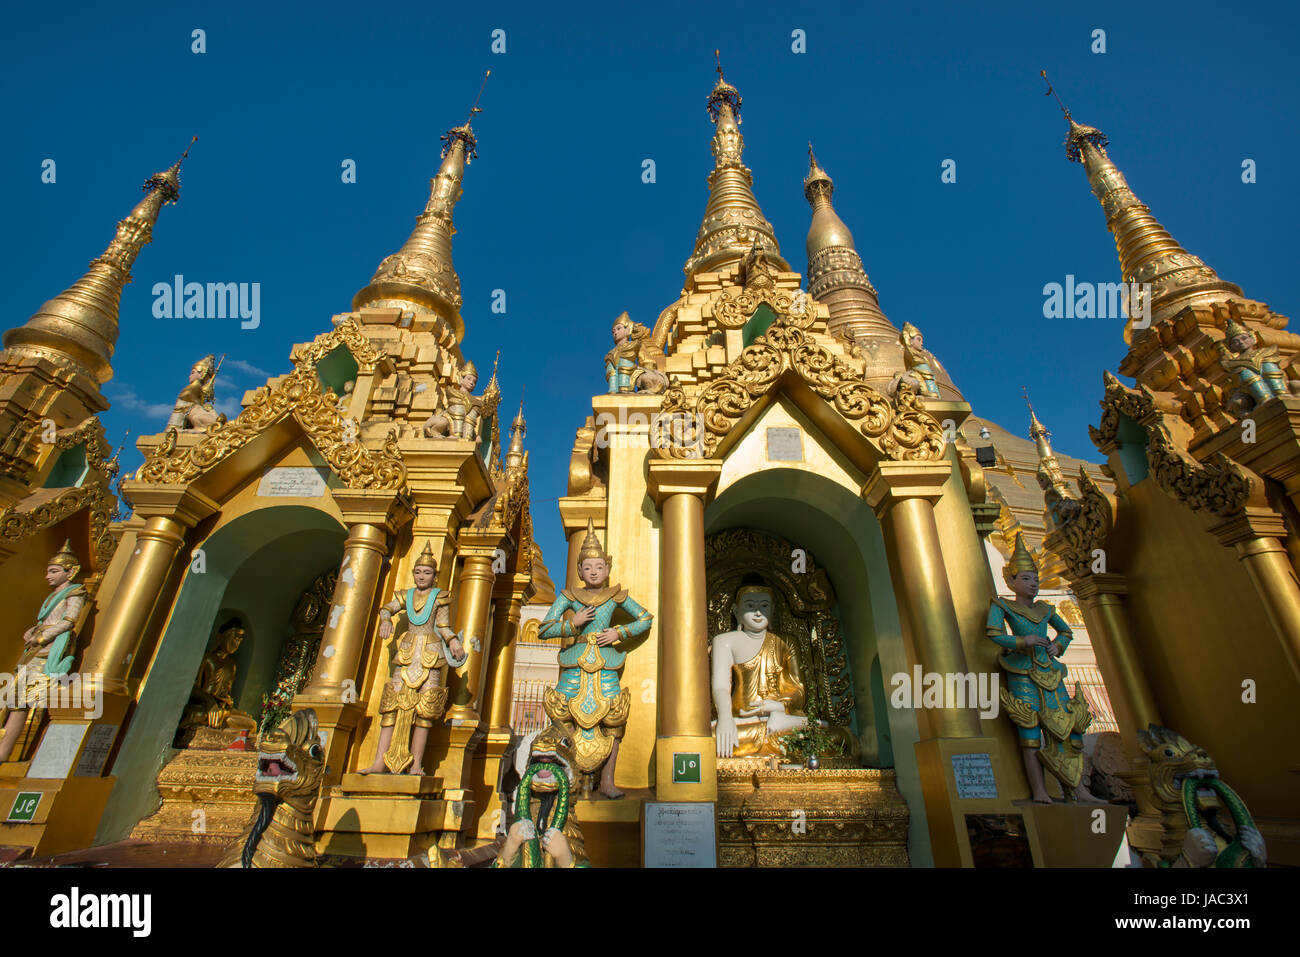 Shrines containing sitting Buddhas surround the main Pagoda at the Shwedagon Pagoda in Yangon (Rangoon), Myanmar (Burma) Stock Photo